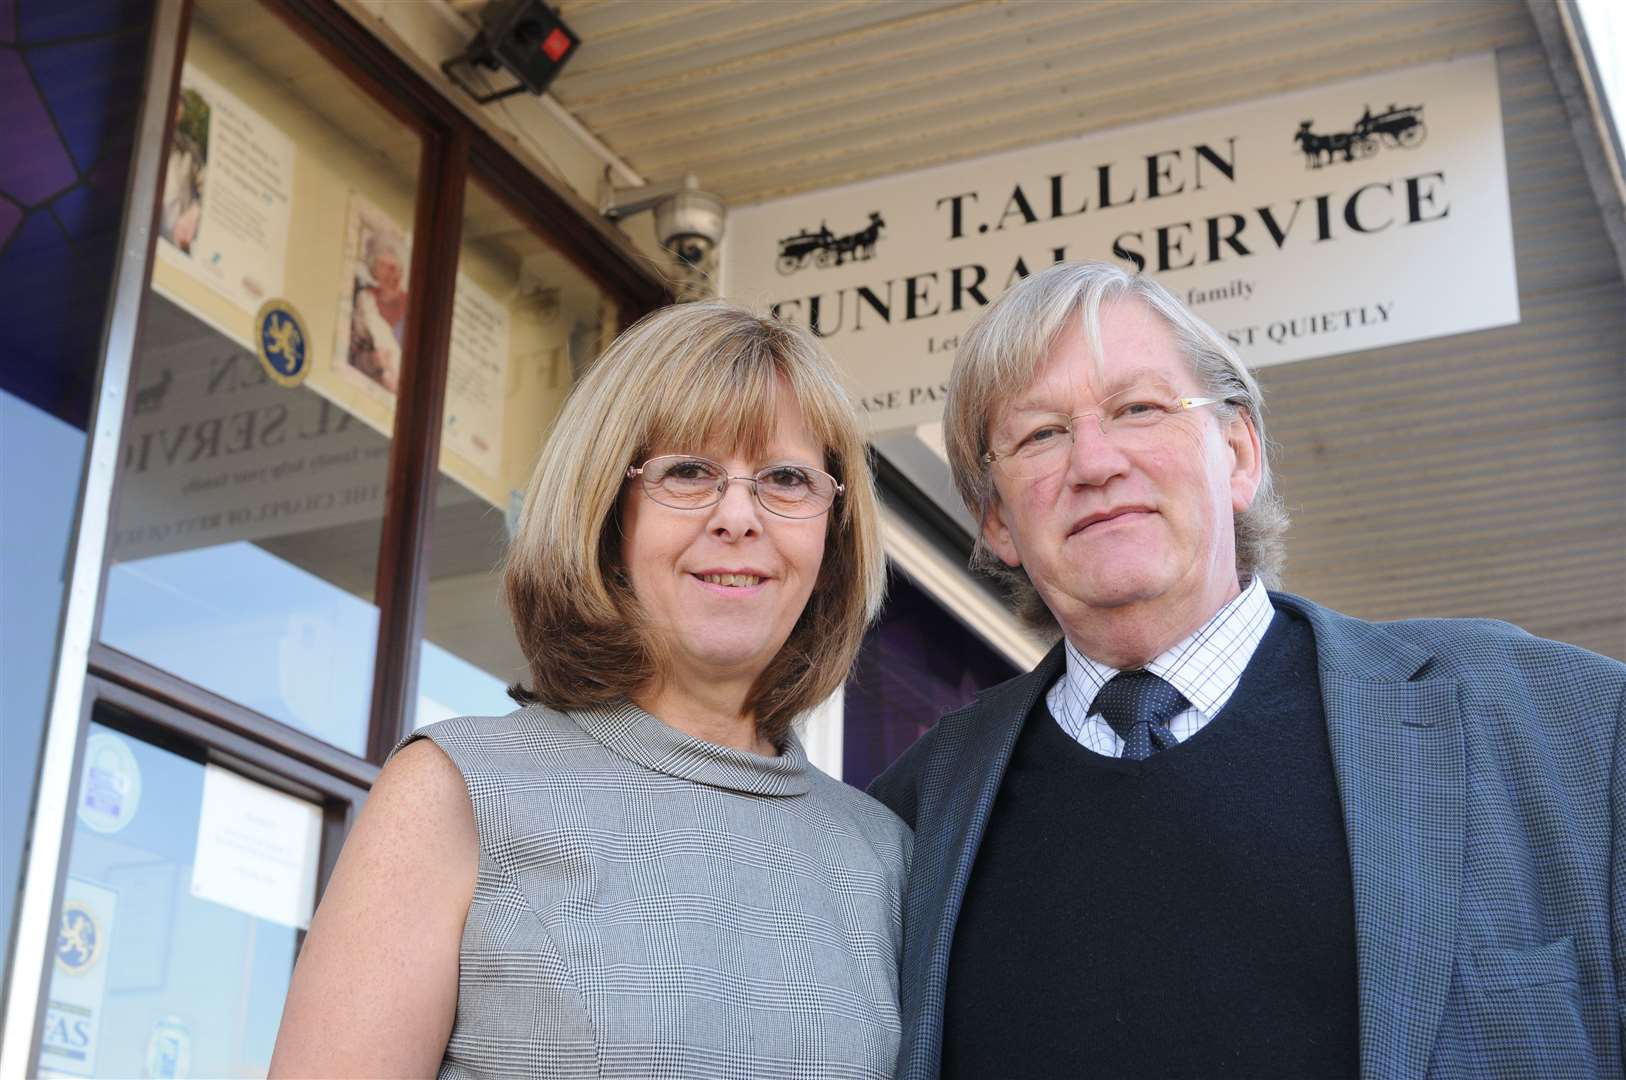 Terry and Lynn Allen celebrating T Allen Funeral Service's 20th Anniversary: Steve Crispe